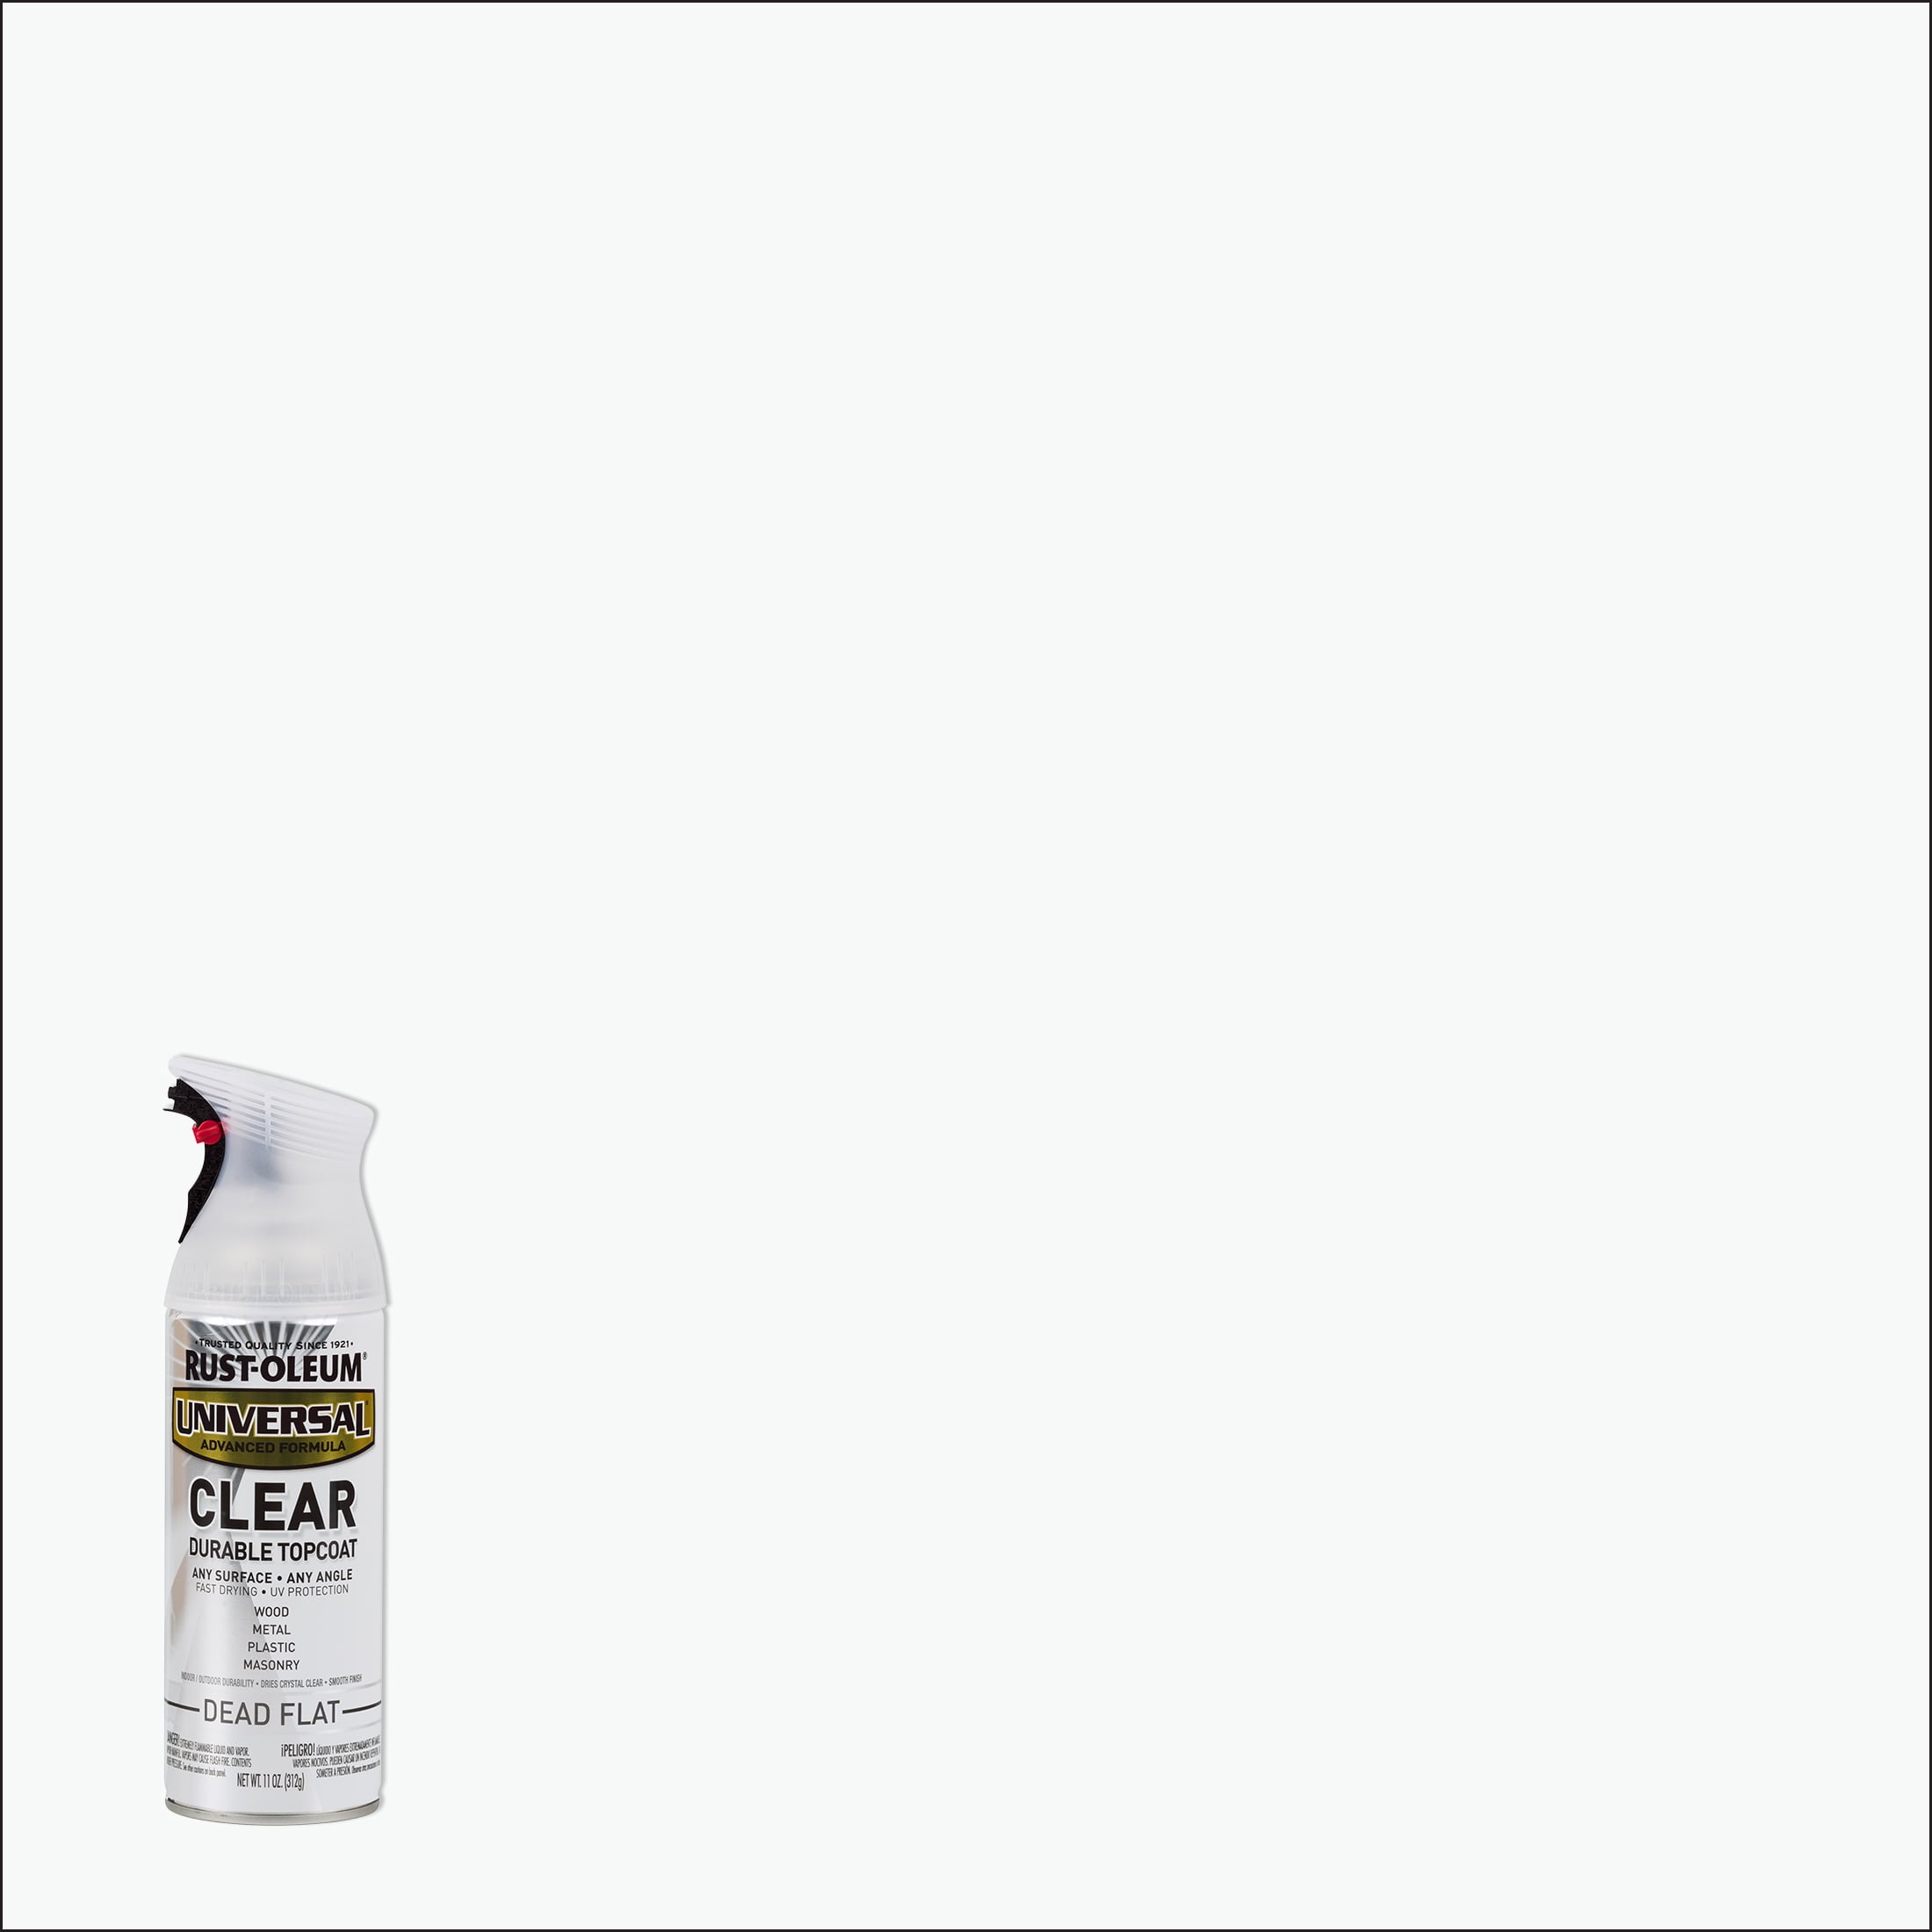 Stops Rust Advanced Clear Enamel Spray Paint